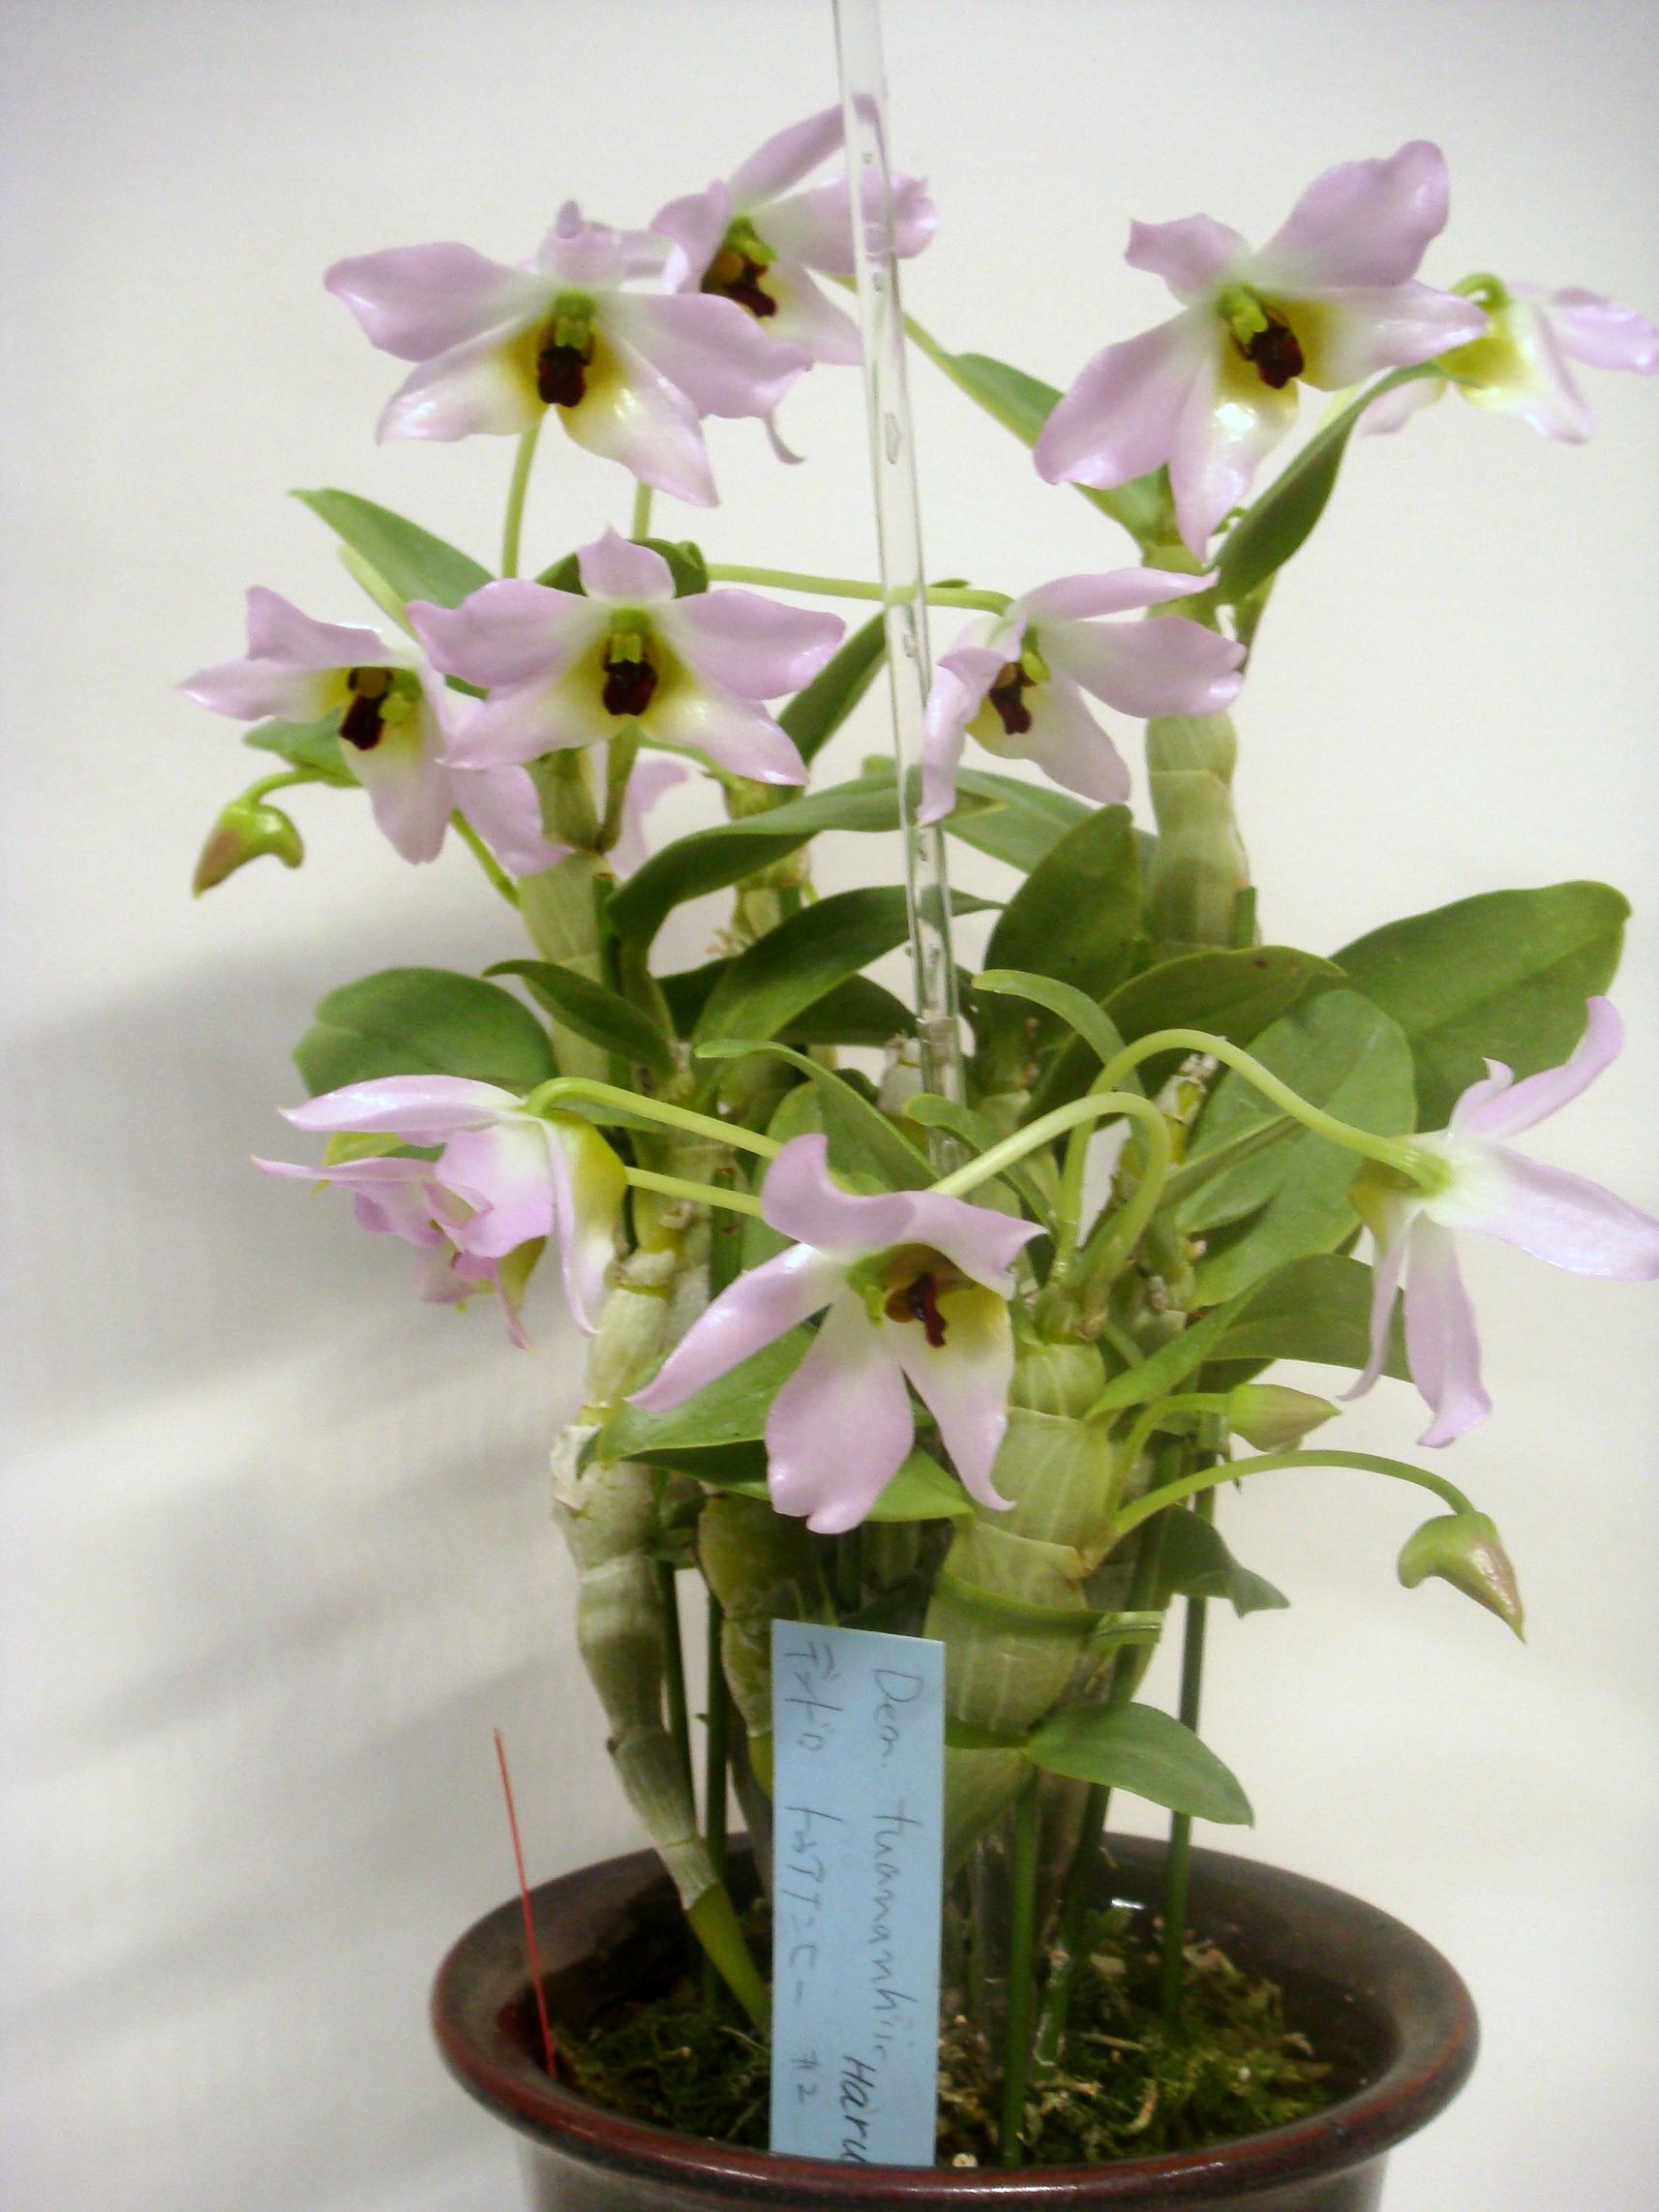 http://orchids.la.coocan.jp/Dendrobium/Dendrobium%20trantuanii/DSC02374.JPG